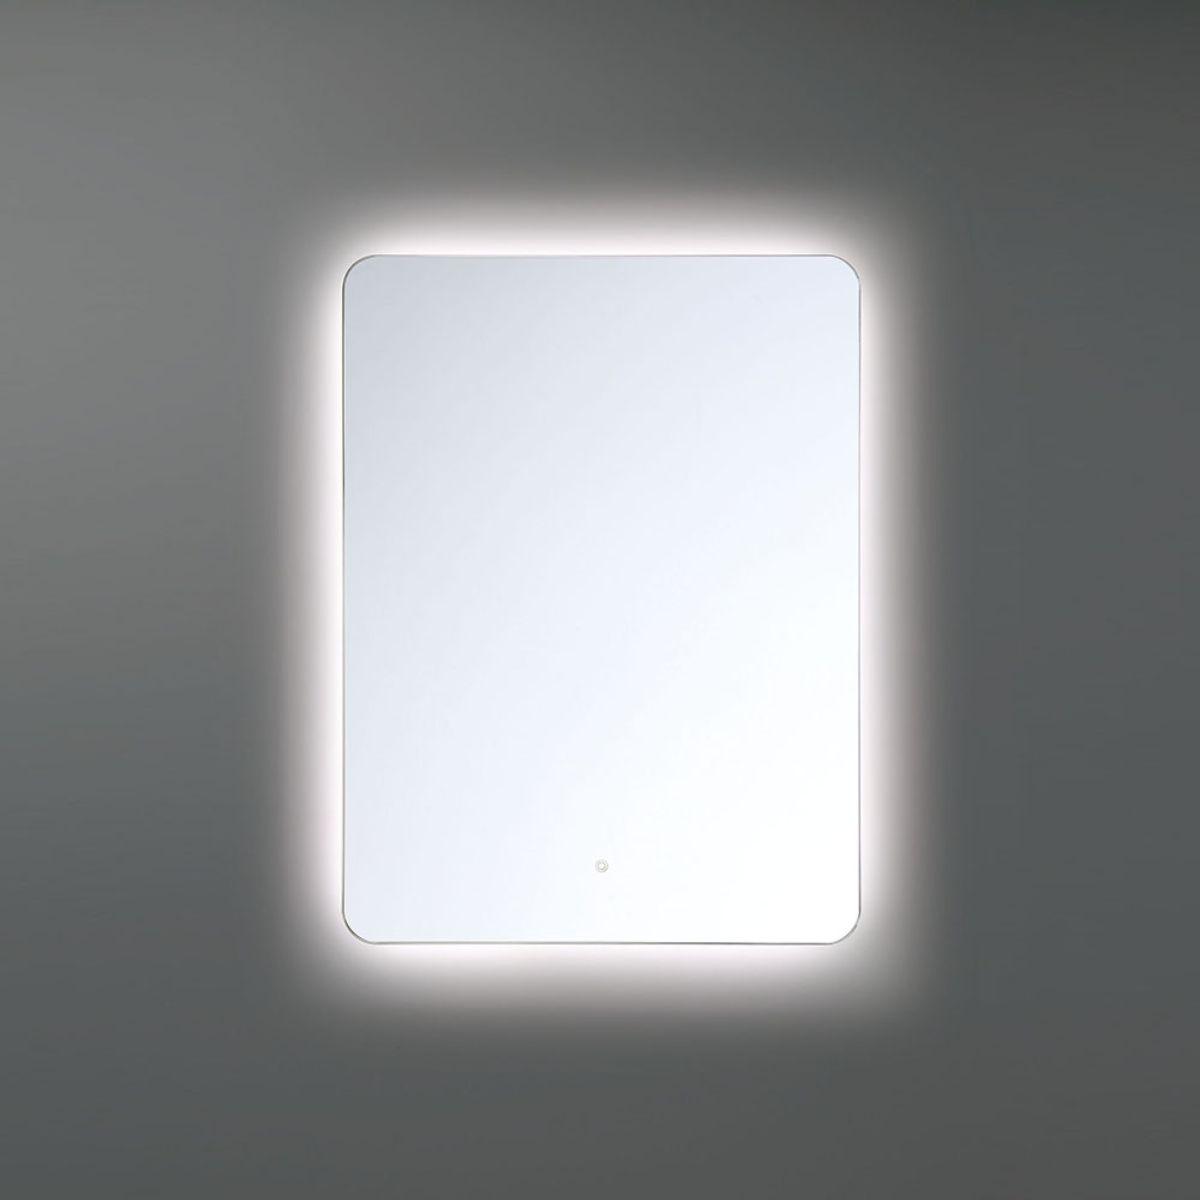 Miir 24 In x 32 In. LED Wall Mirror.